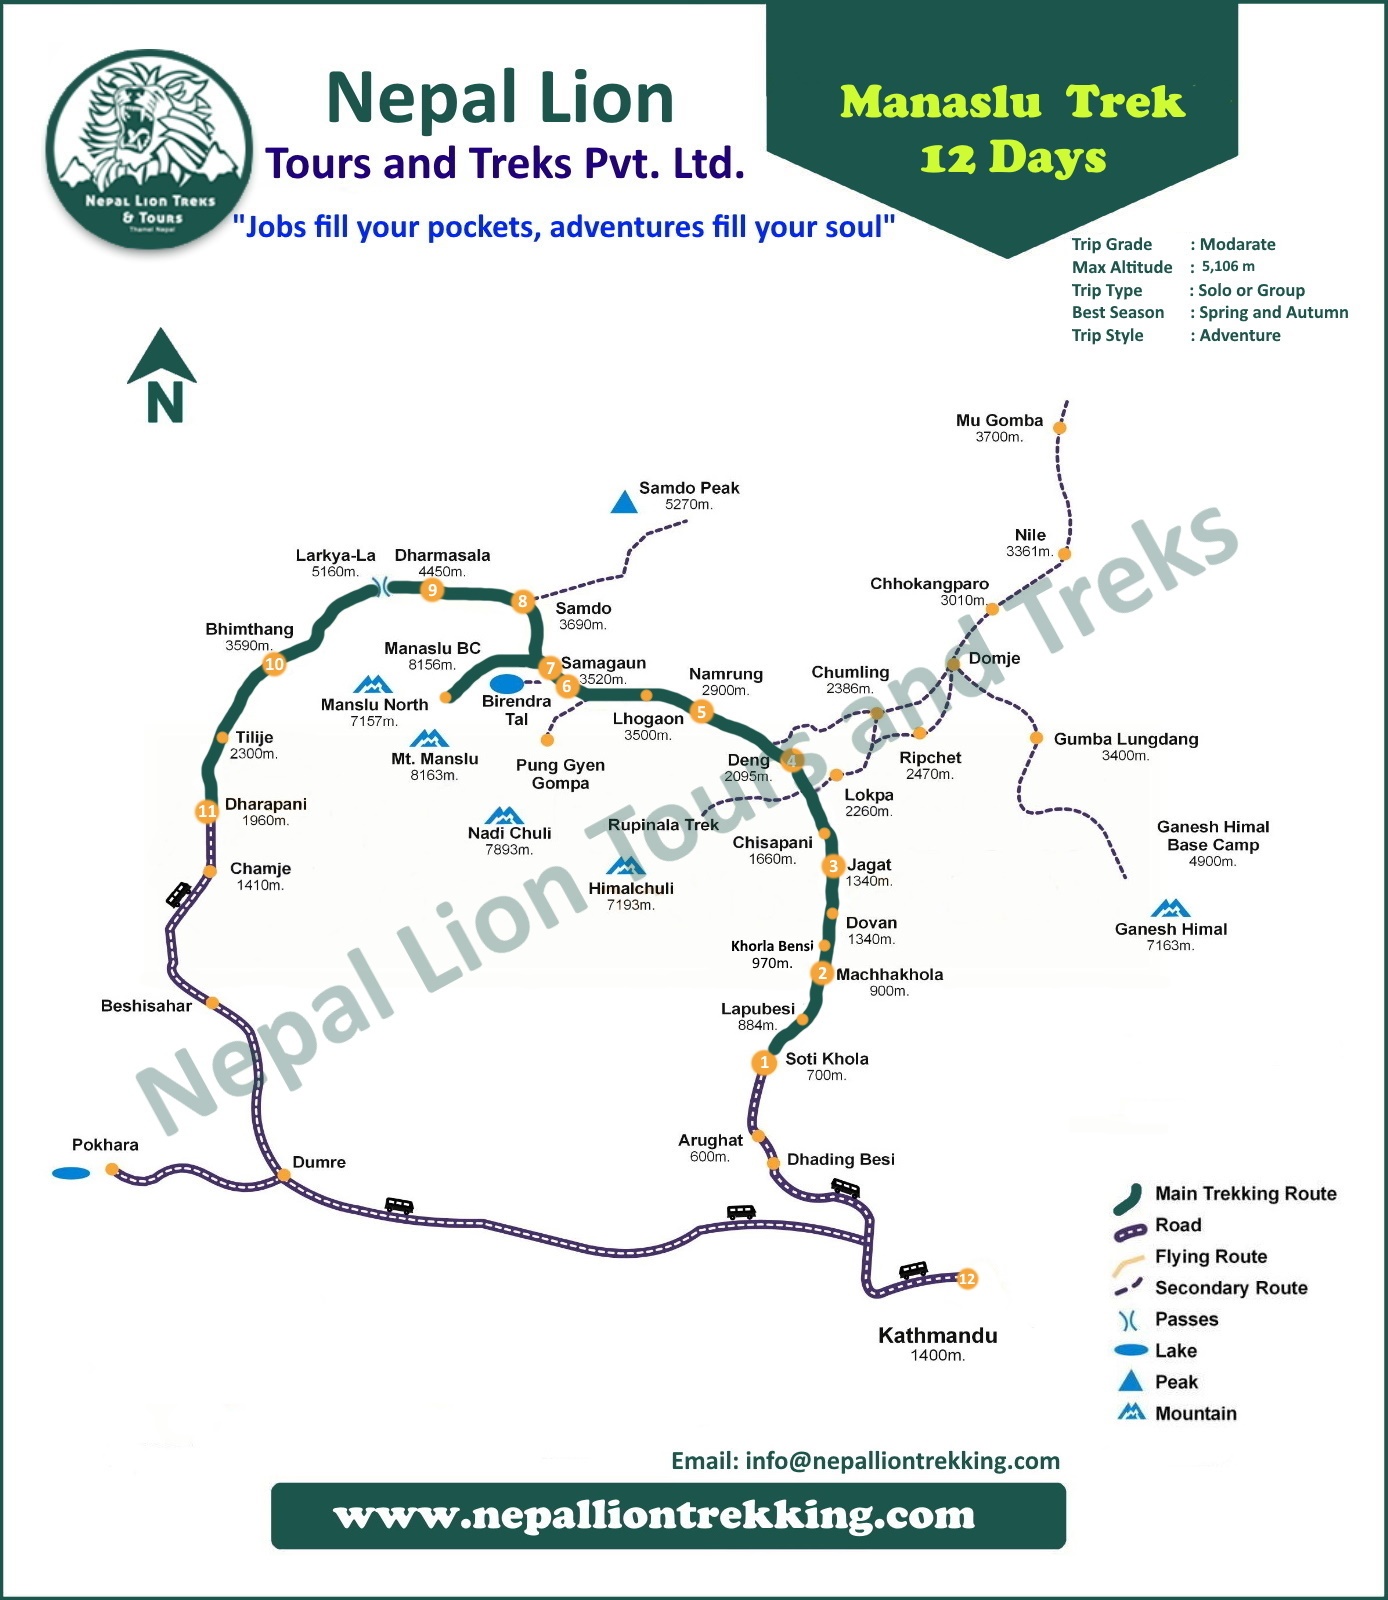 tourhub | Nepal Lion Tours and Treks | 12 Days Manaslu Circuit Trekking in Nepal | Tour Map